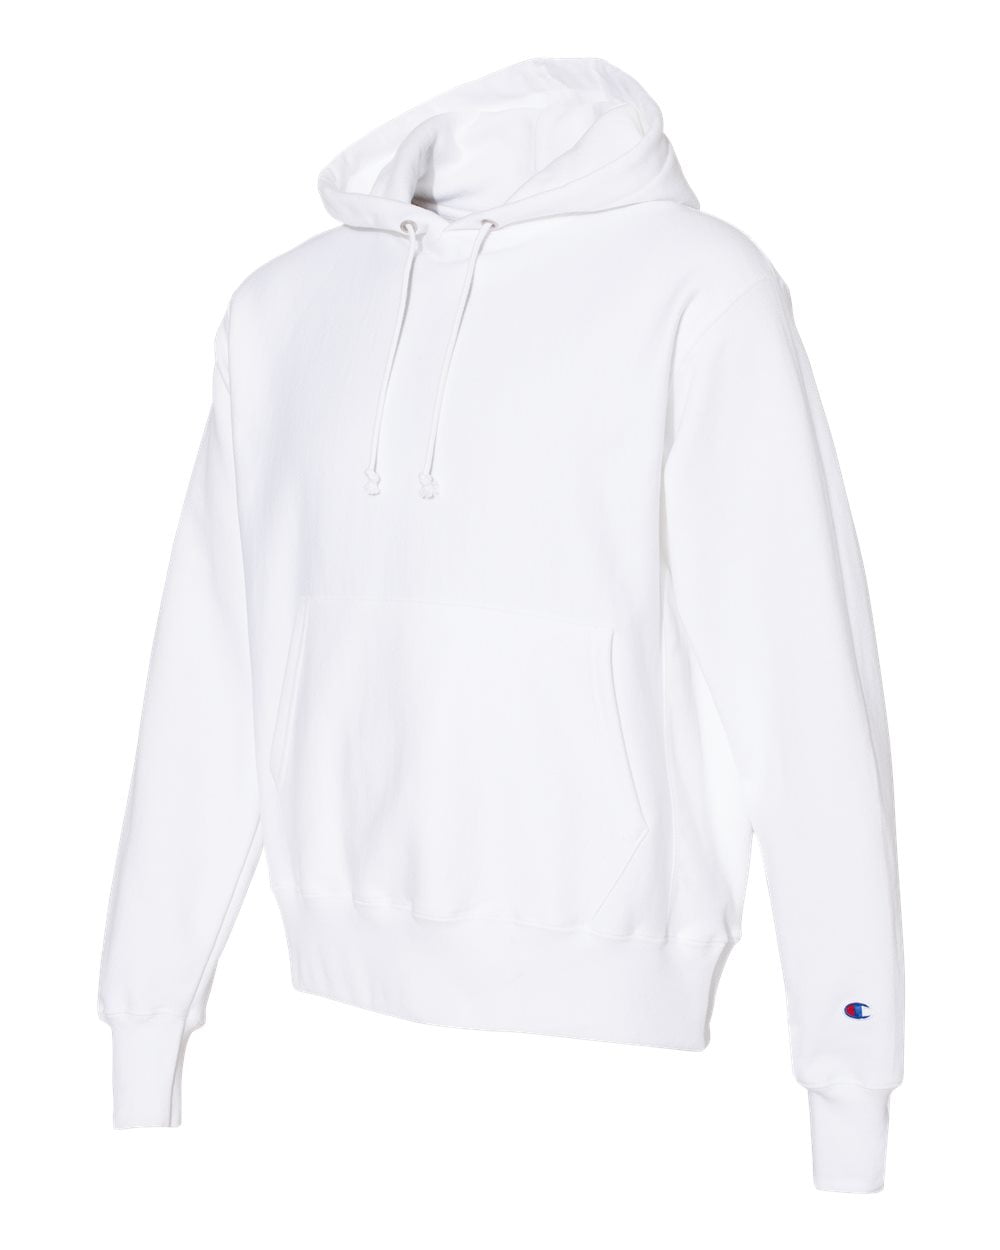 Champion - Hooded Sweatshirt - S101 - Walmart.com